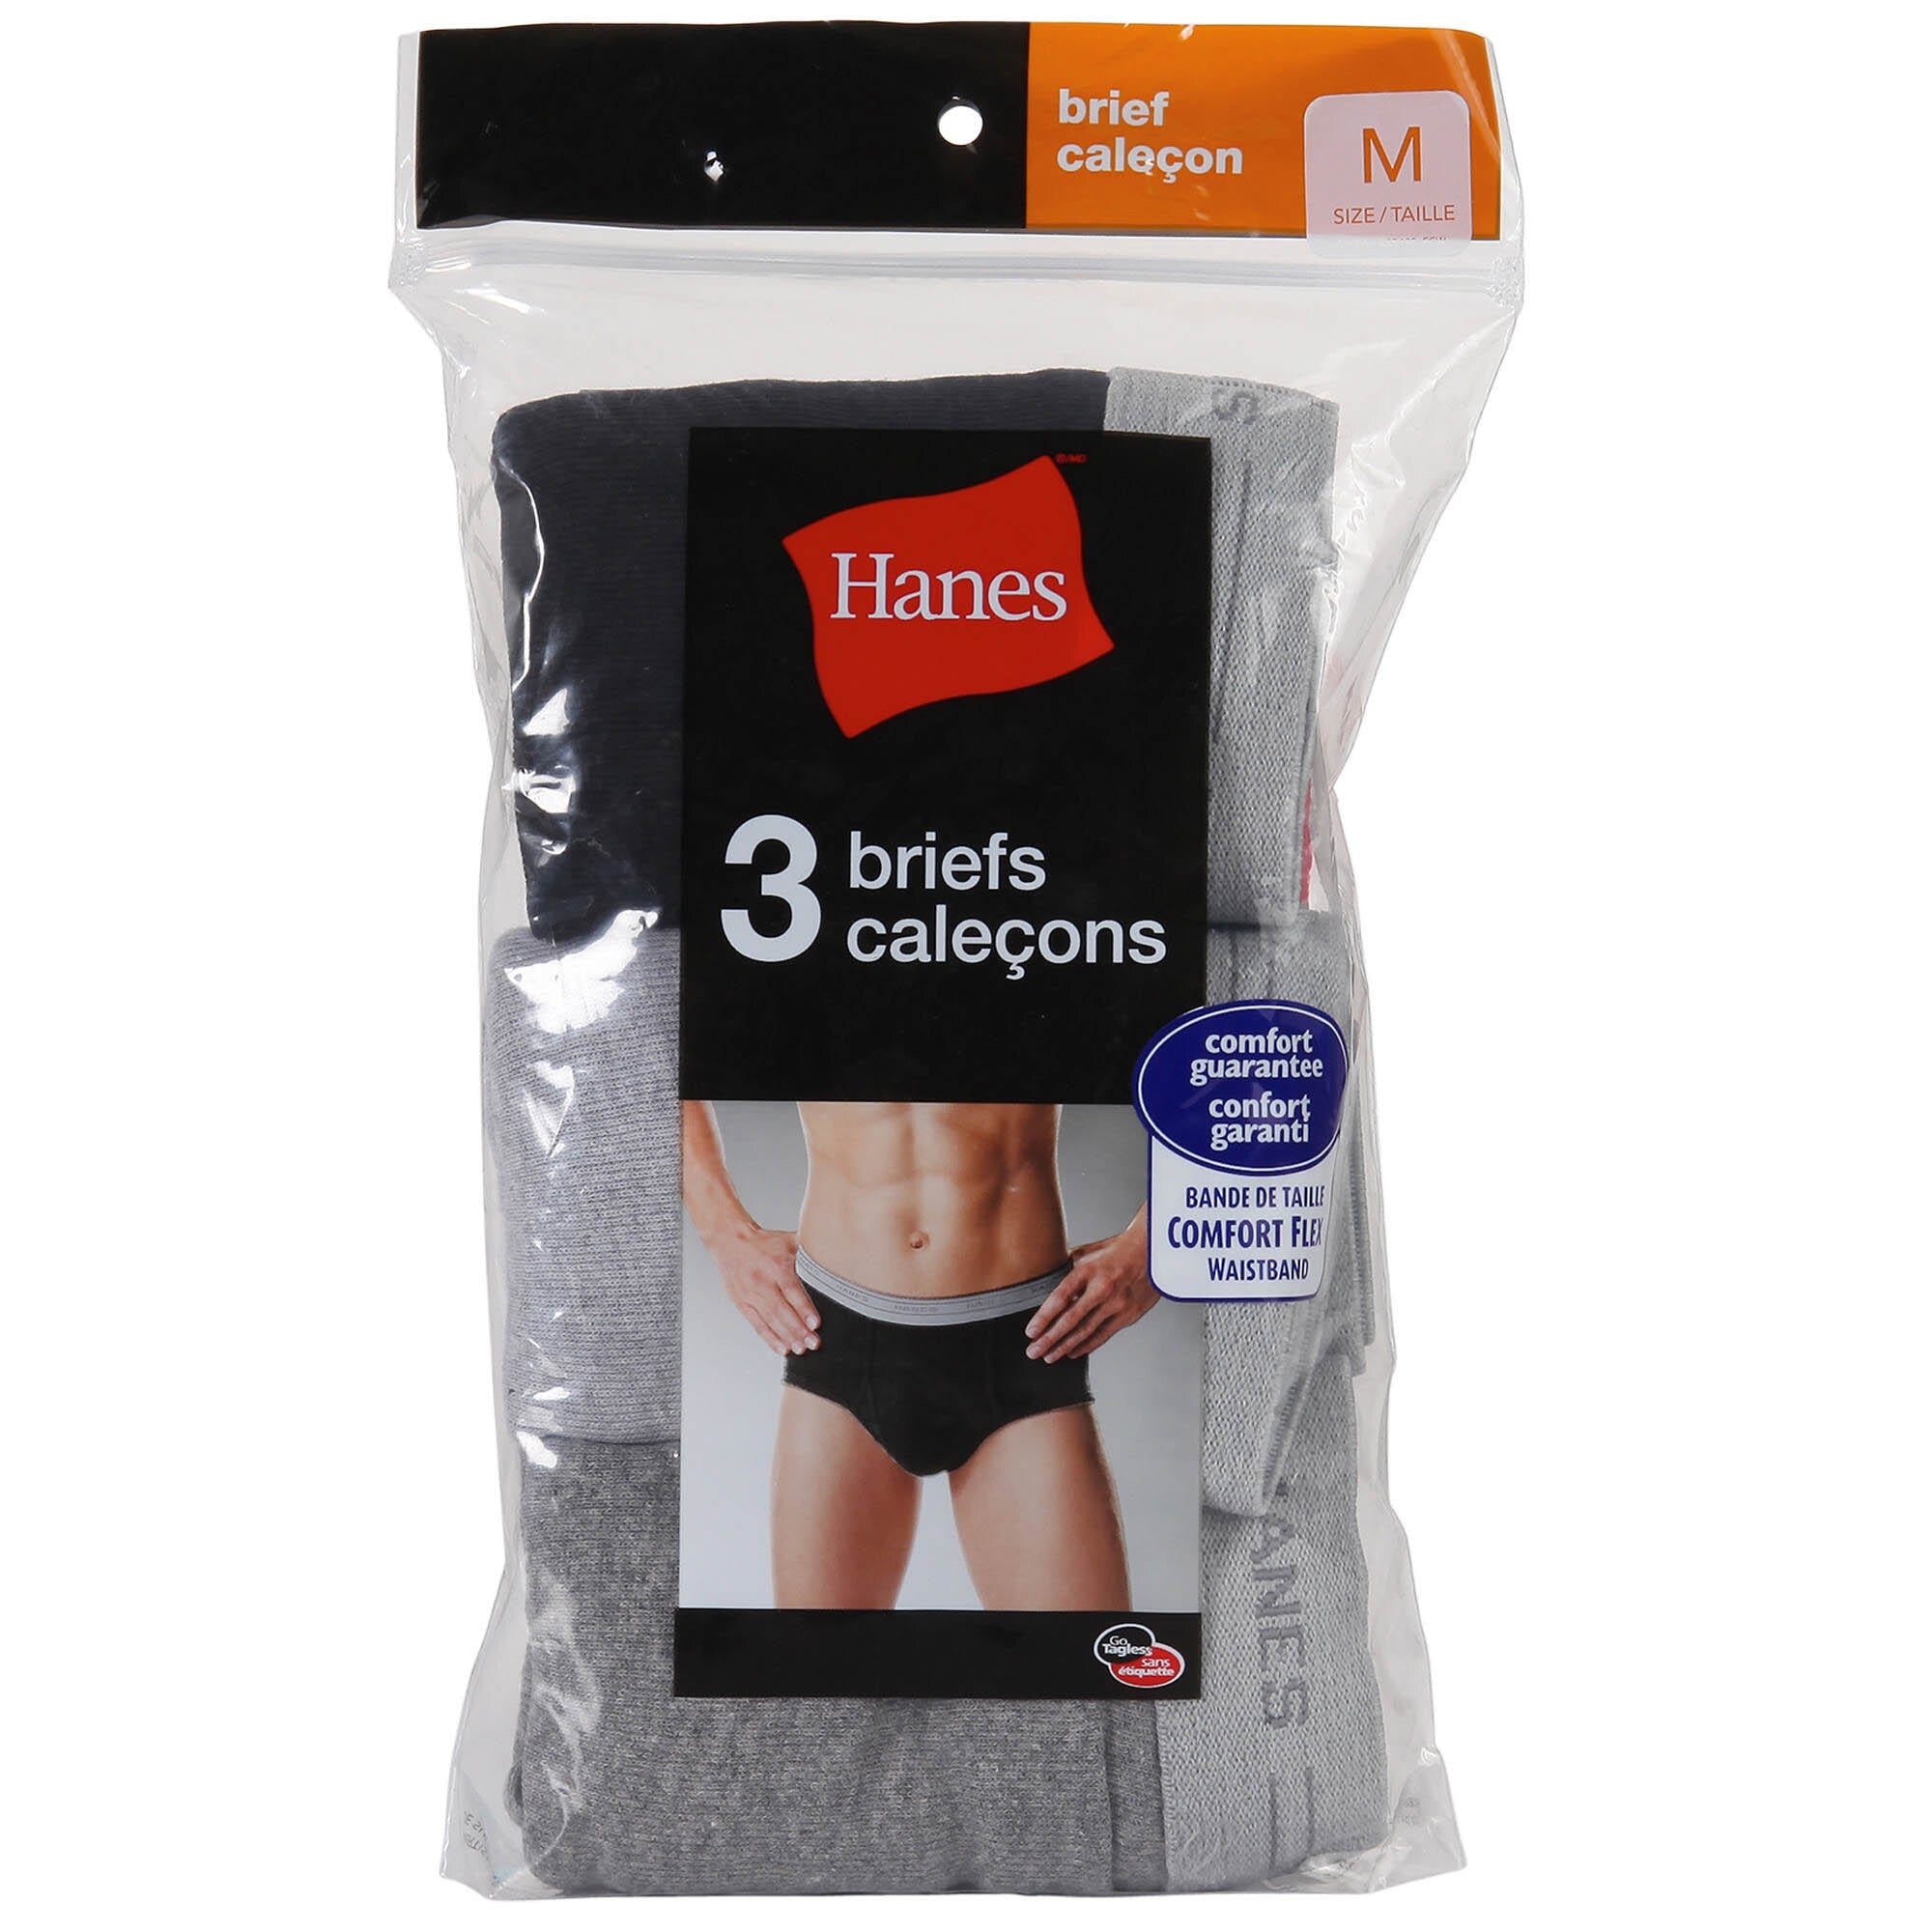 Hanes Men's Cotton Briefs with Comfort Flex Waistband, Assorted